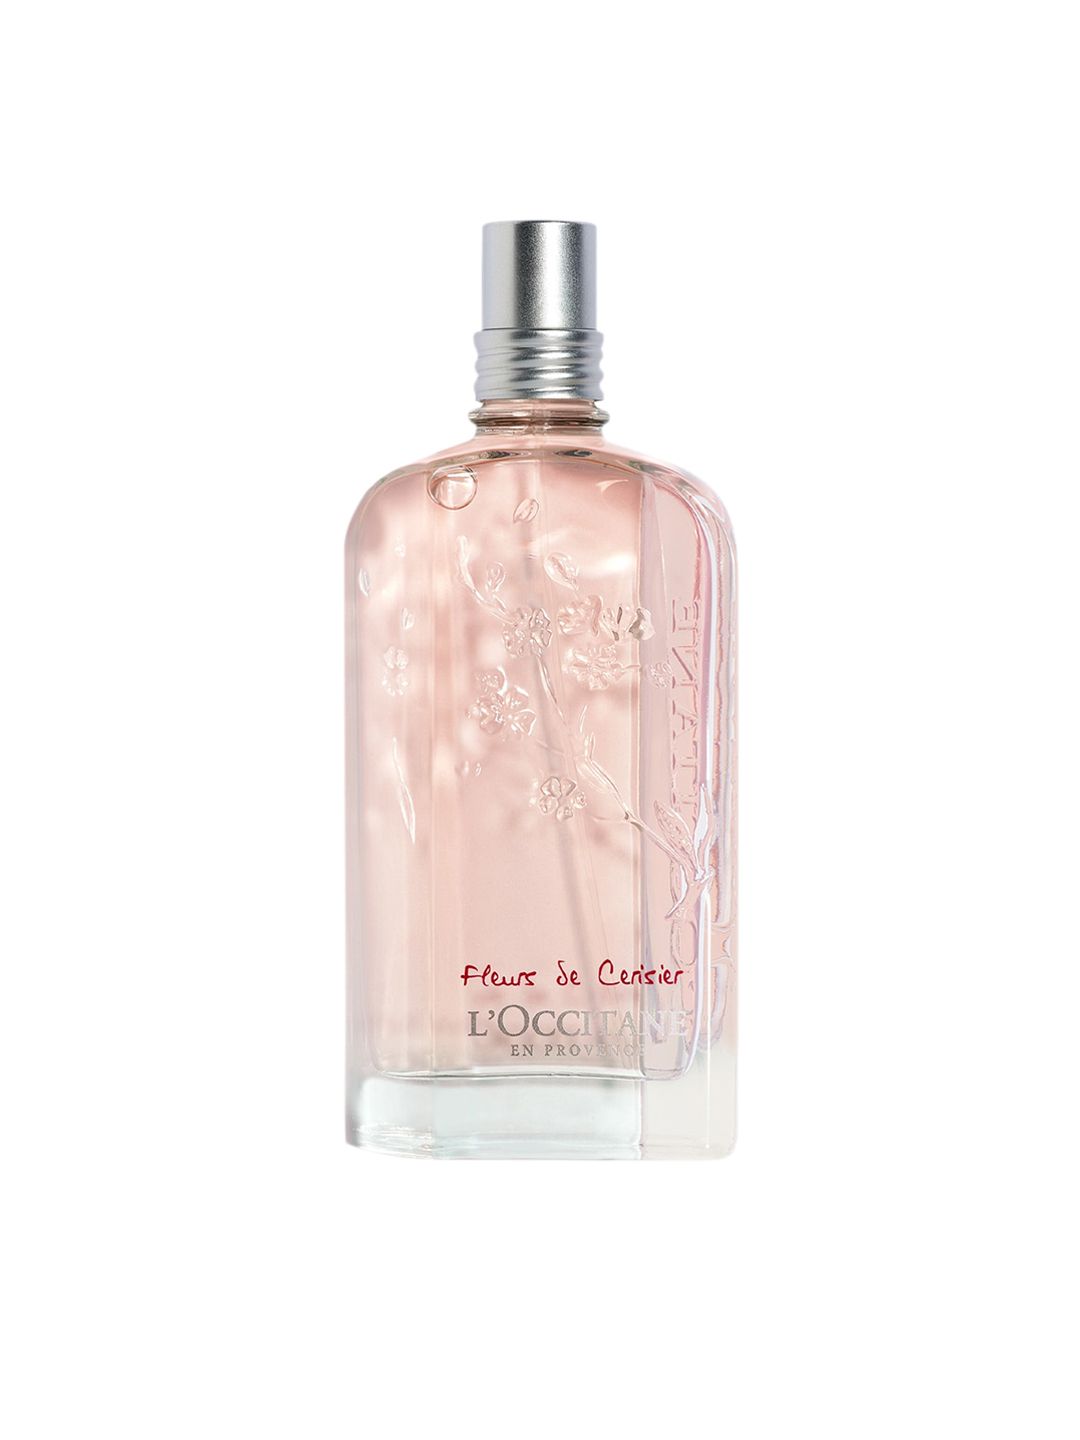 LOccitane en Provence Cherry Blossom EDT Perfume-75 ml Price in India